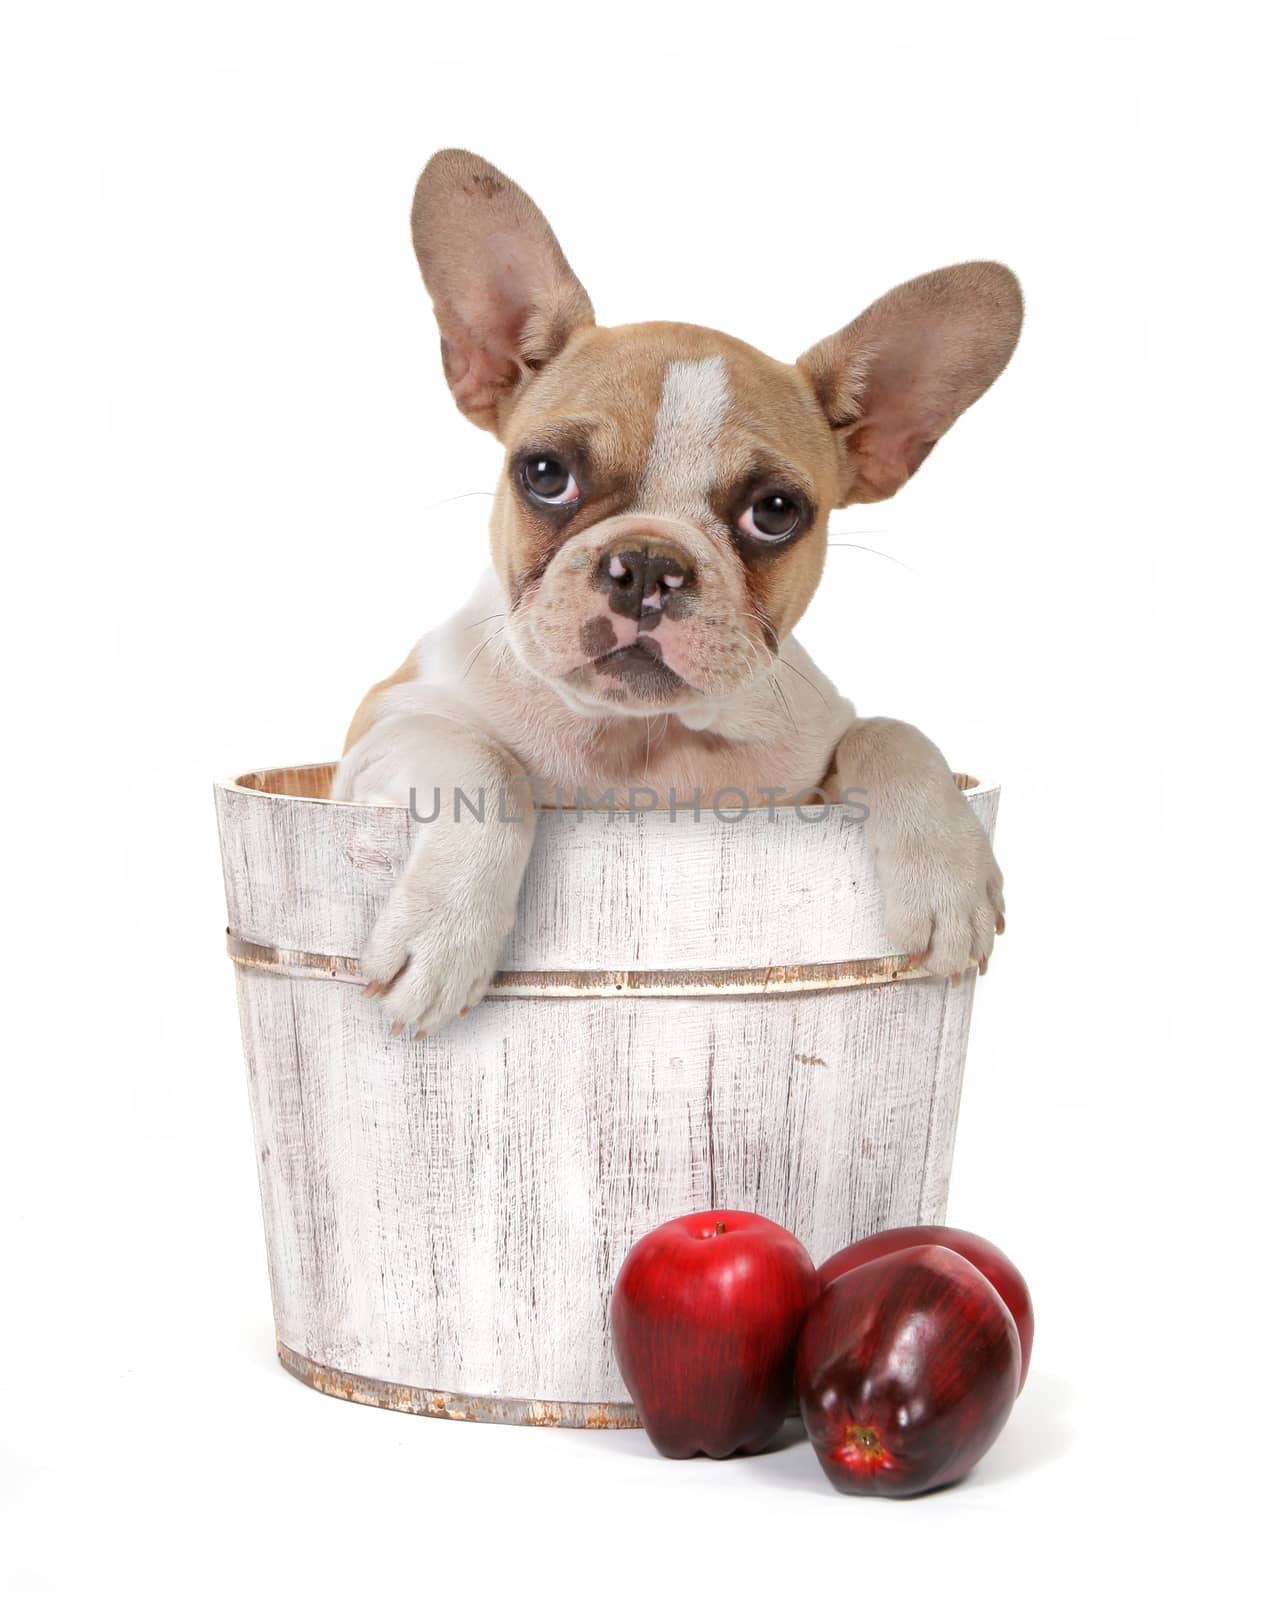 Puppy Dog In an Apple Barrel Studio Shot by tobkatrina